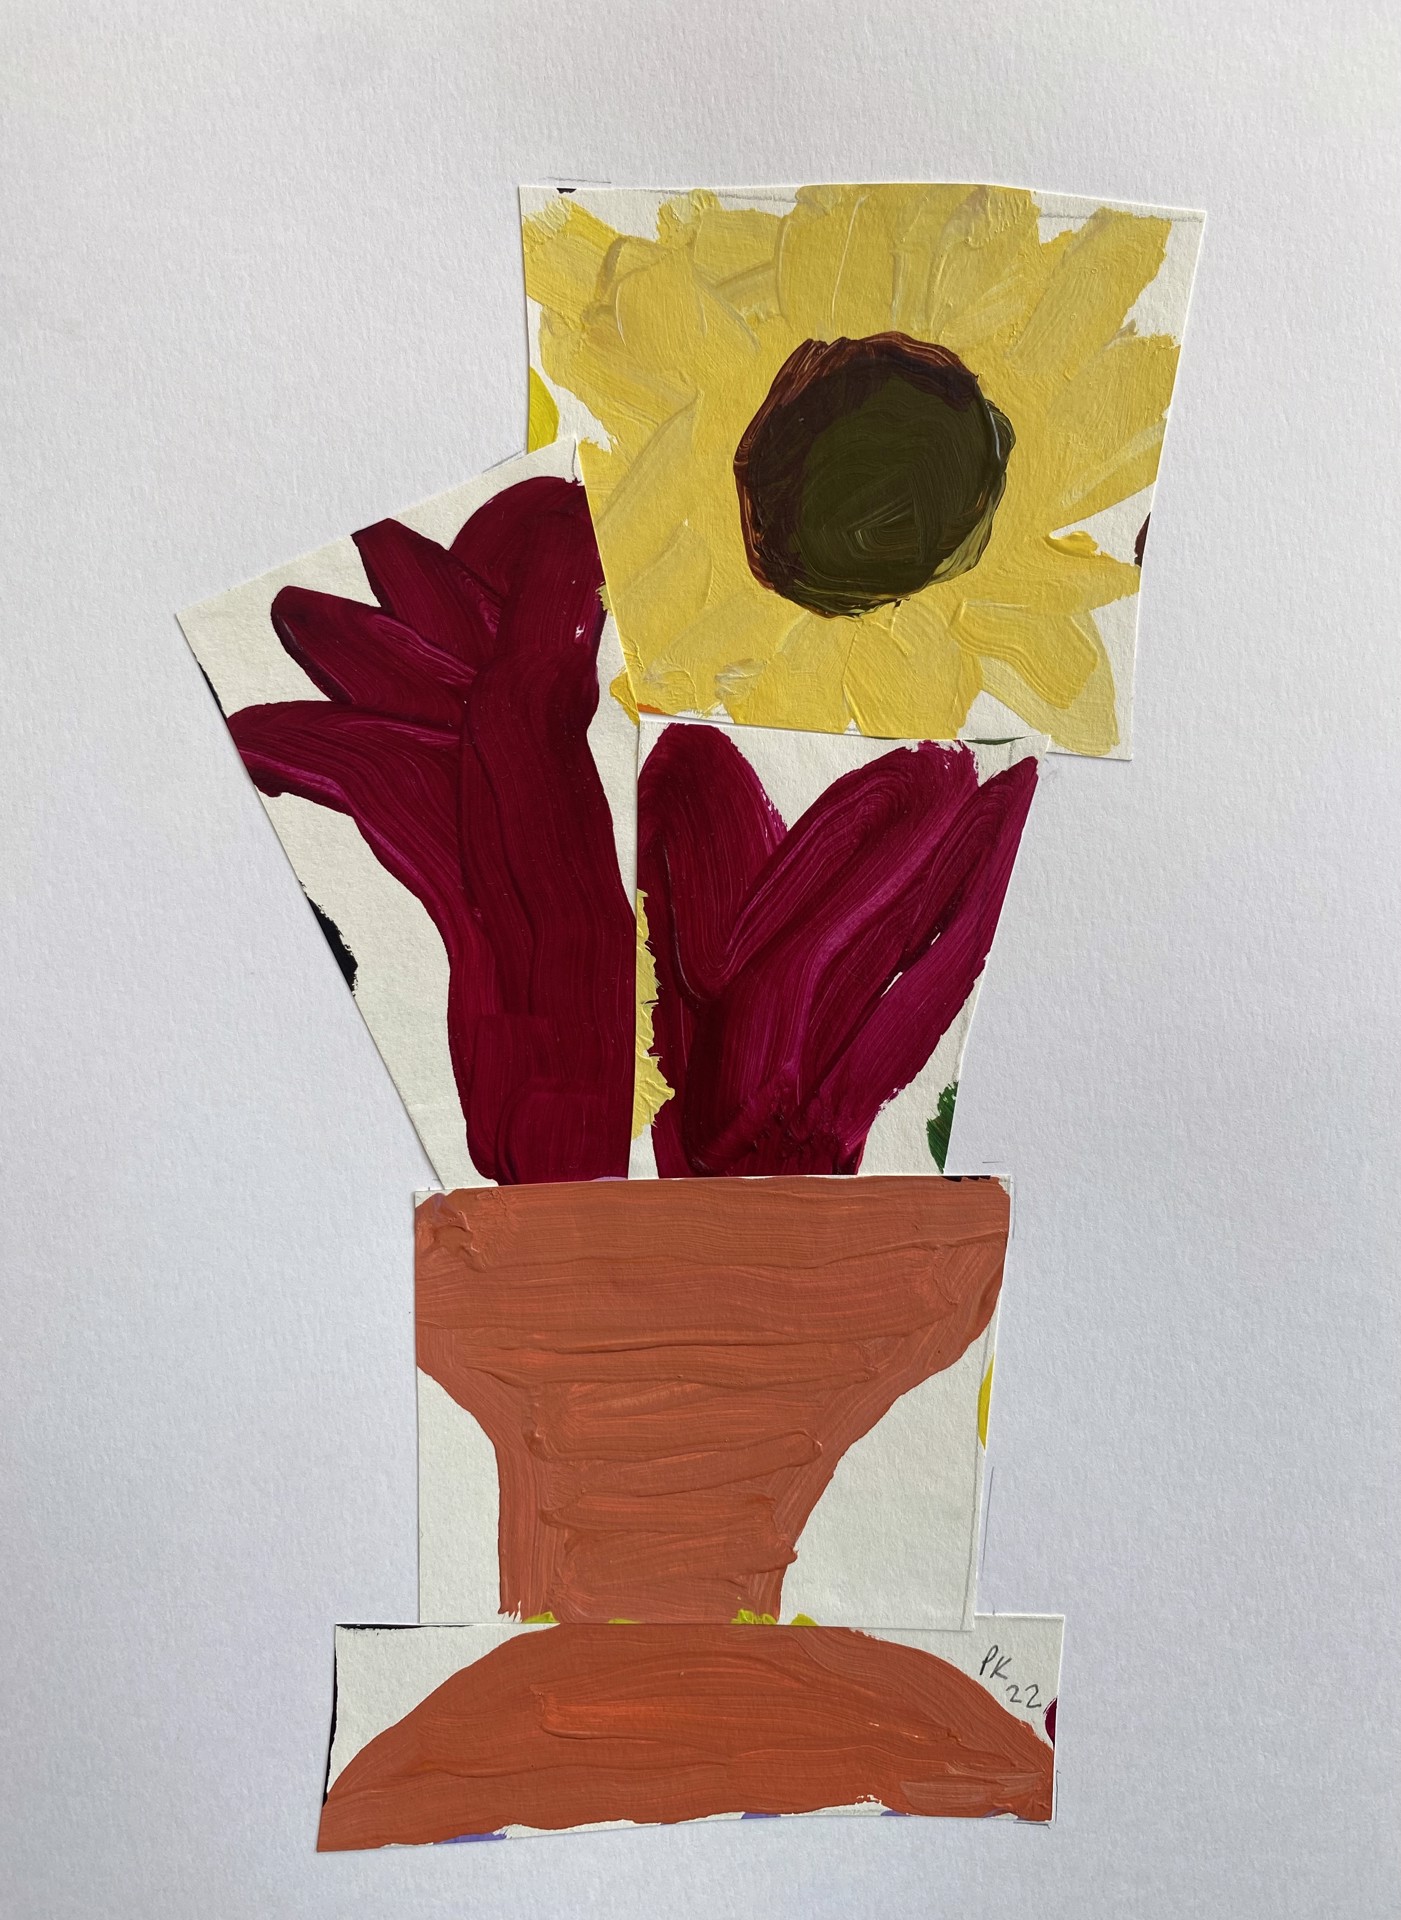 Alex Bullock – The Sunflower